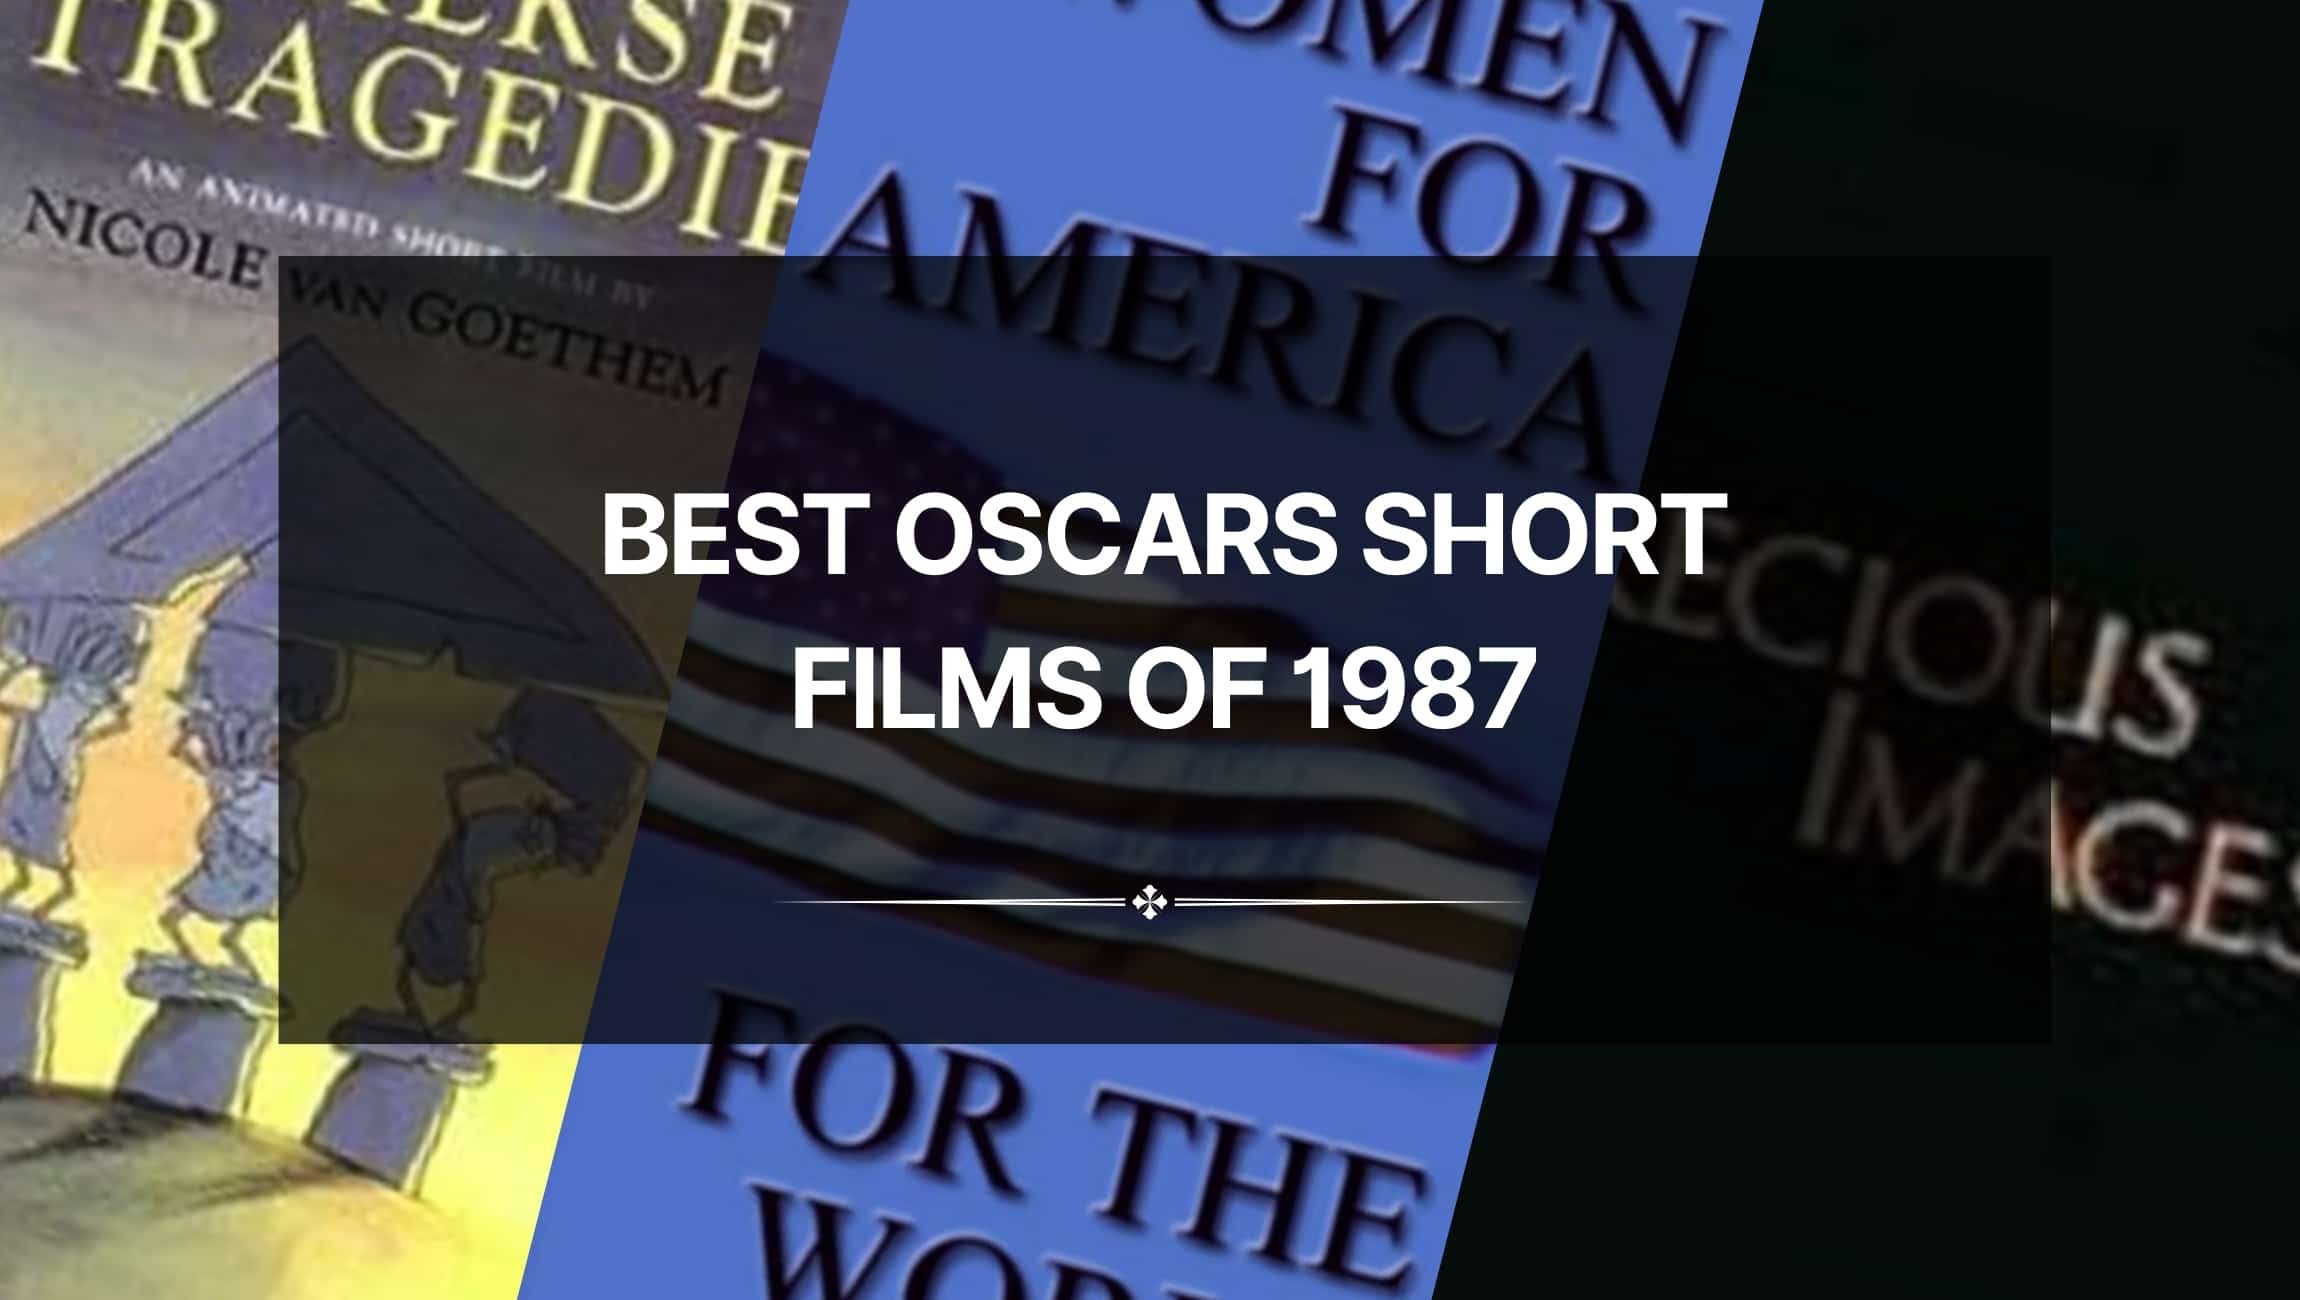 Best Oscars Short Films of 1987